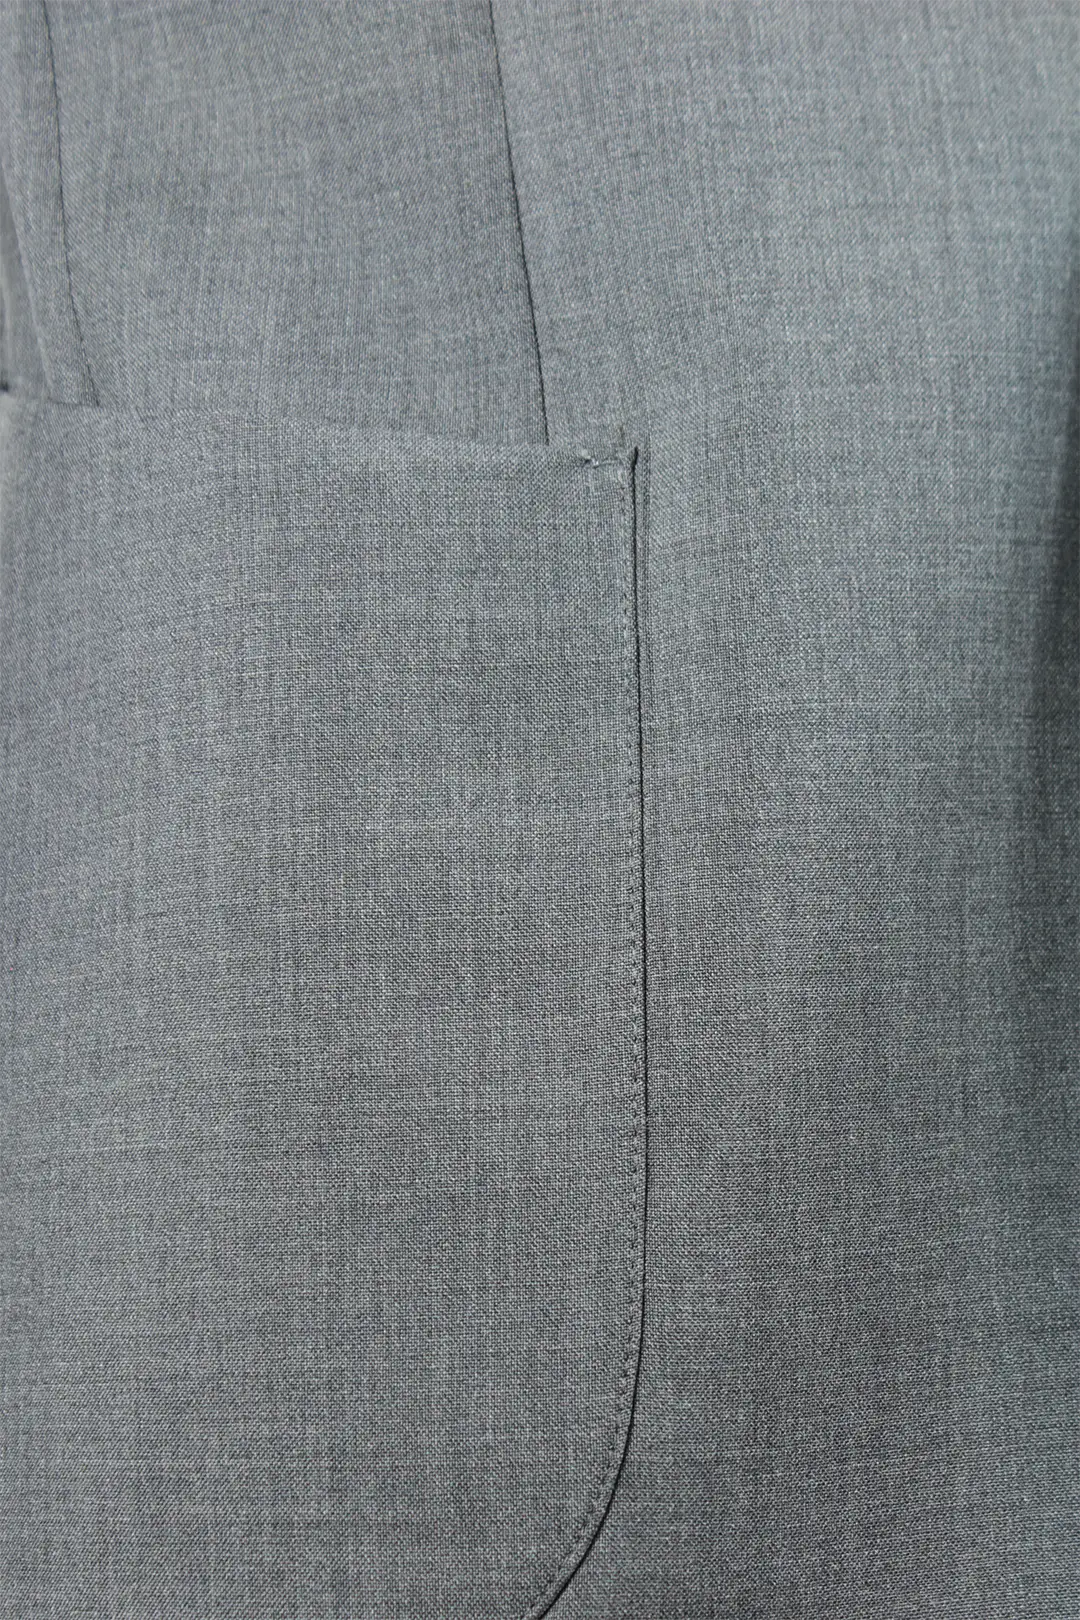 Giacca sfoderata in tela di lana grigio tasca